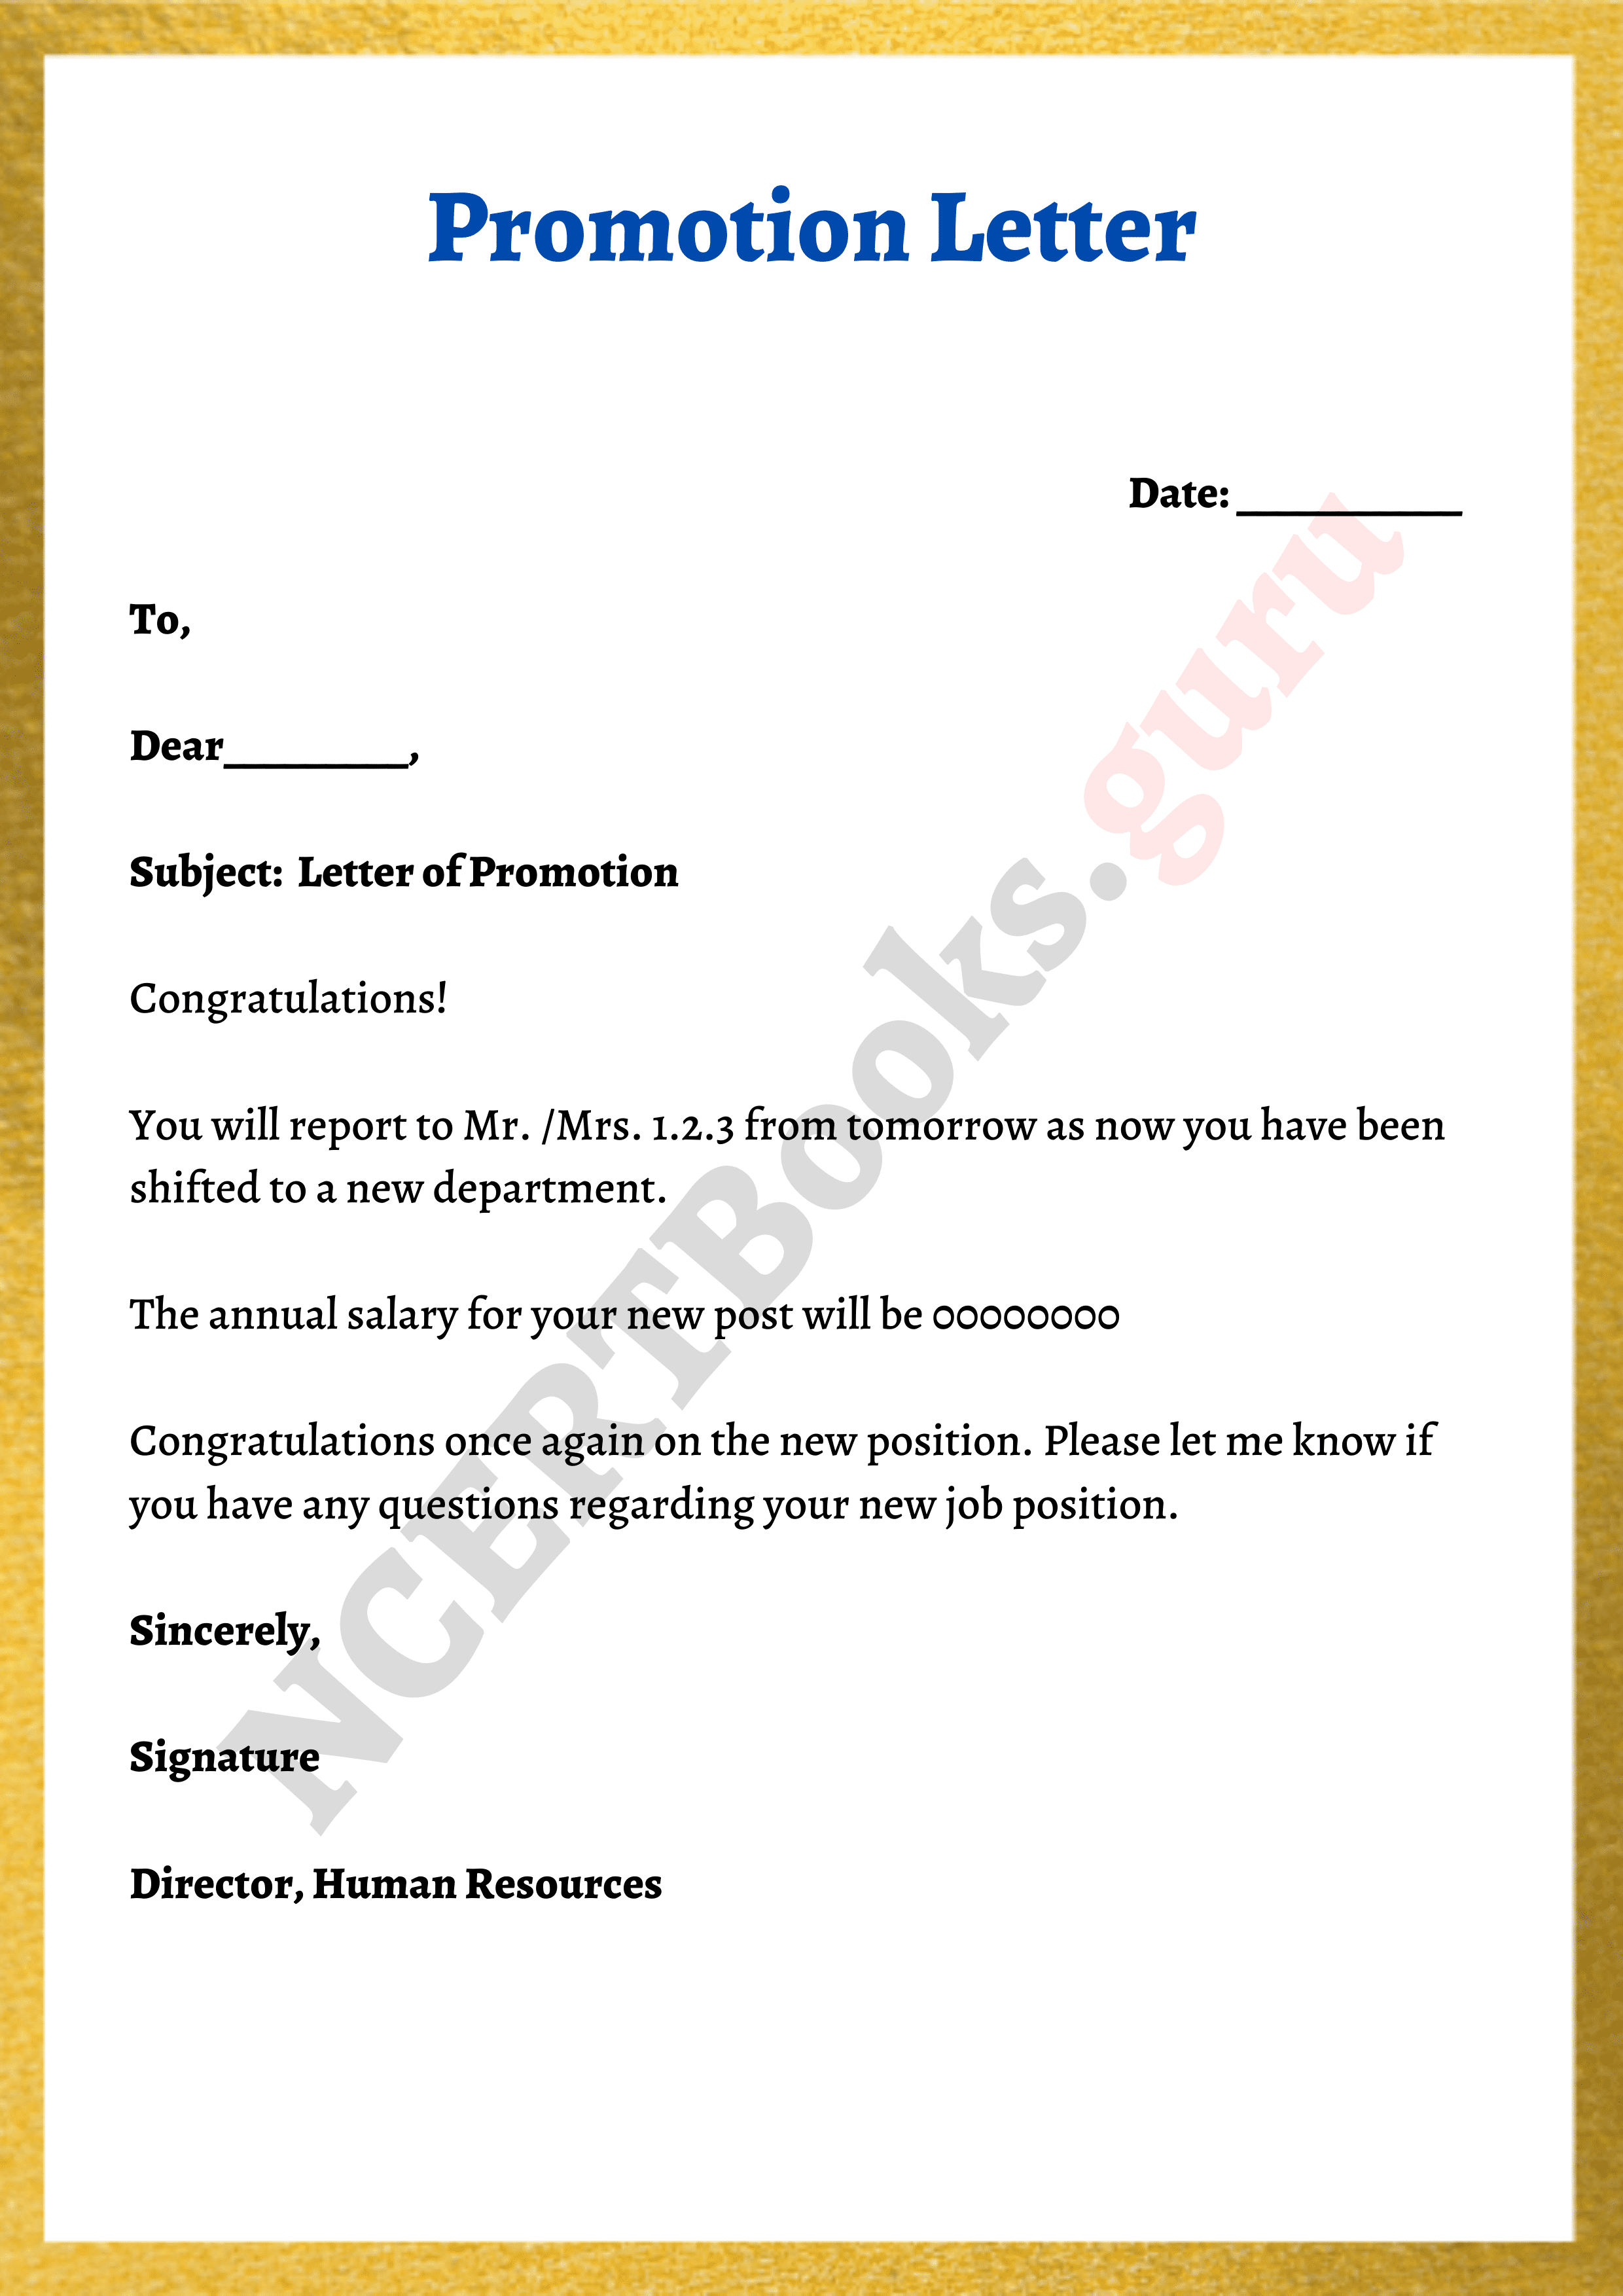 Letter of Promotion Sample